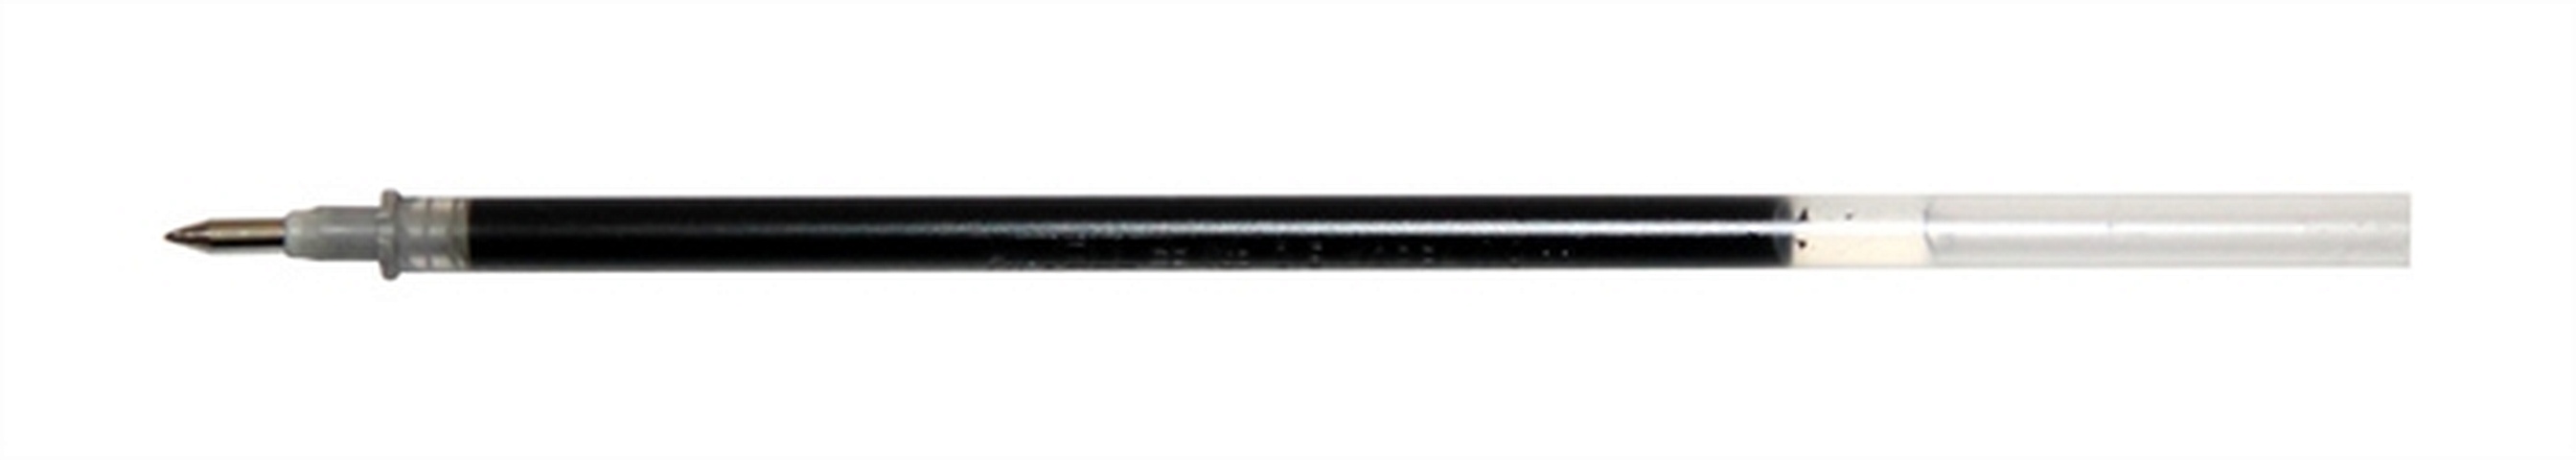 Стержень, Crown, гелевый, 0,5 мм, черный стержень гелевый fine черный erichkrause